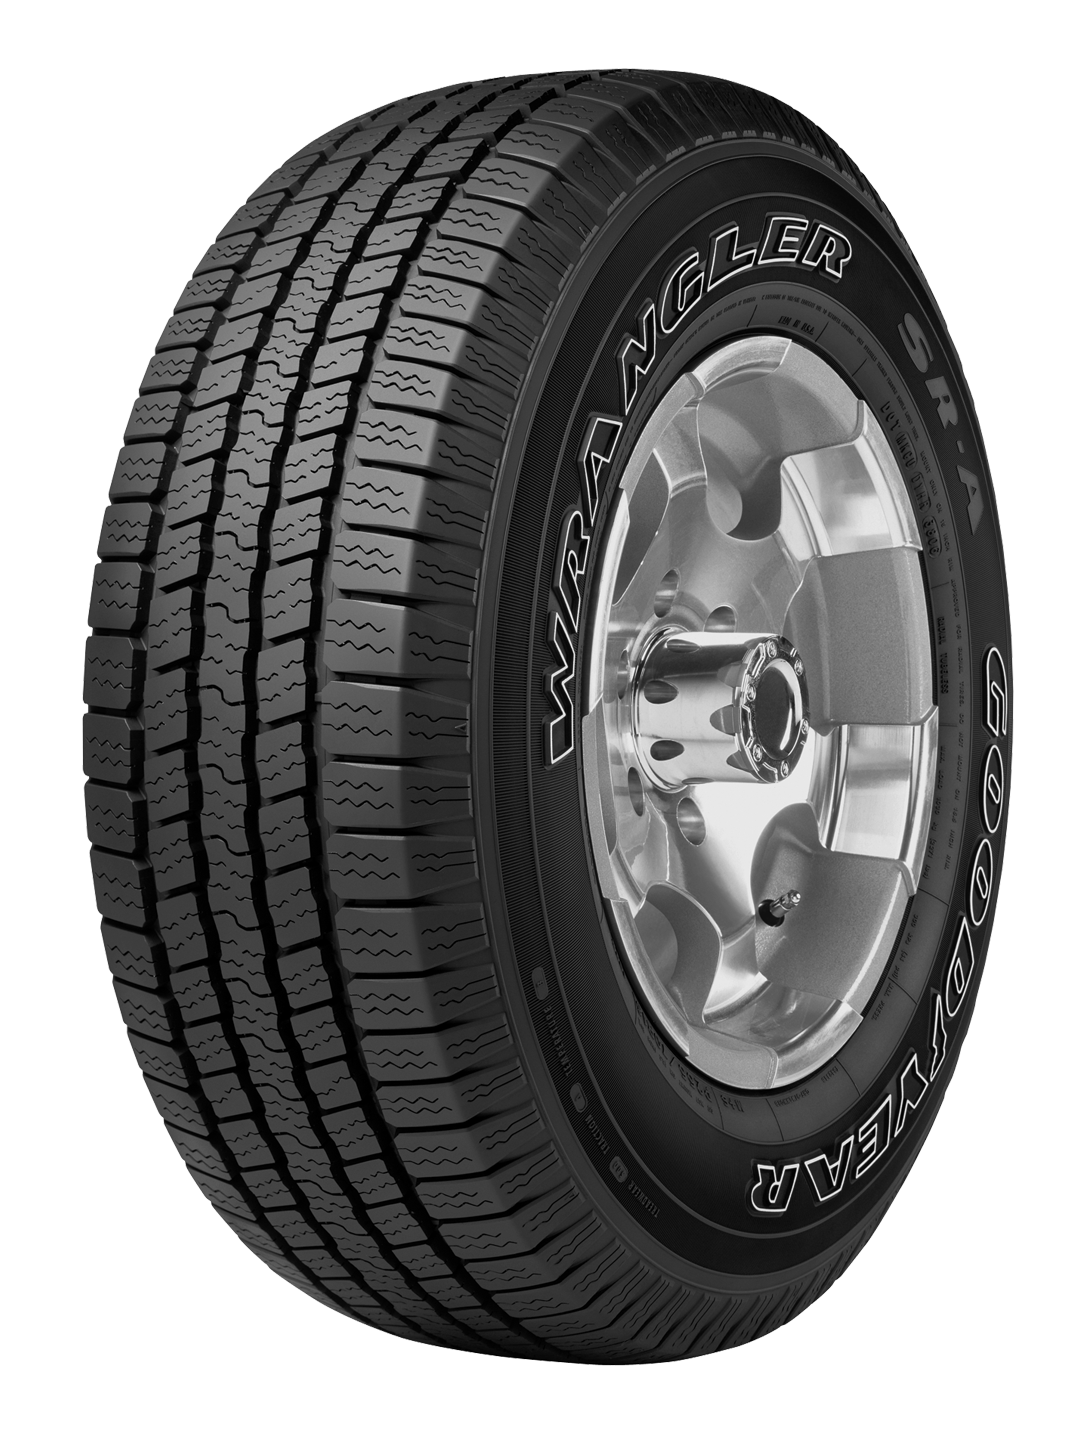 GOODYEAR WRANGLER SR-A(P) P275 / 60 R 20 - Appalacian Tire Products &  Service Appalacian Tire Products & Service